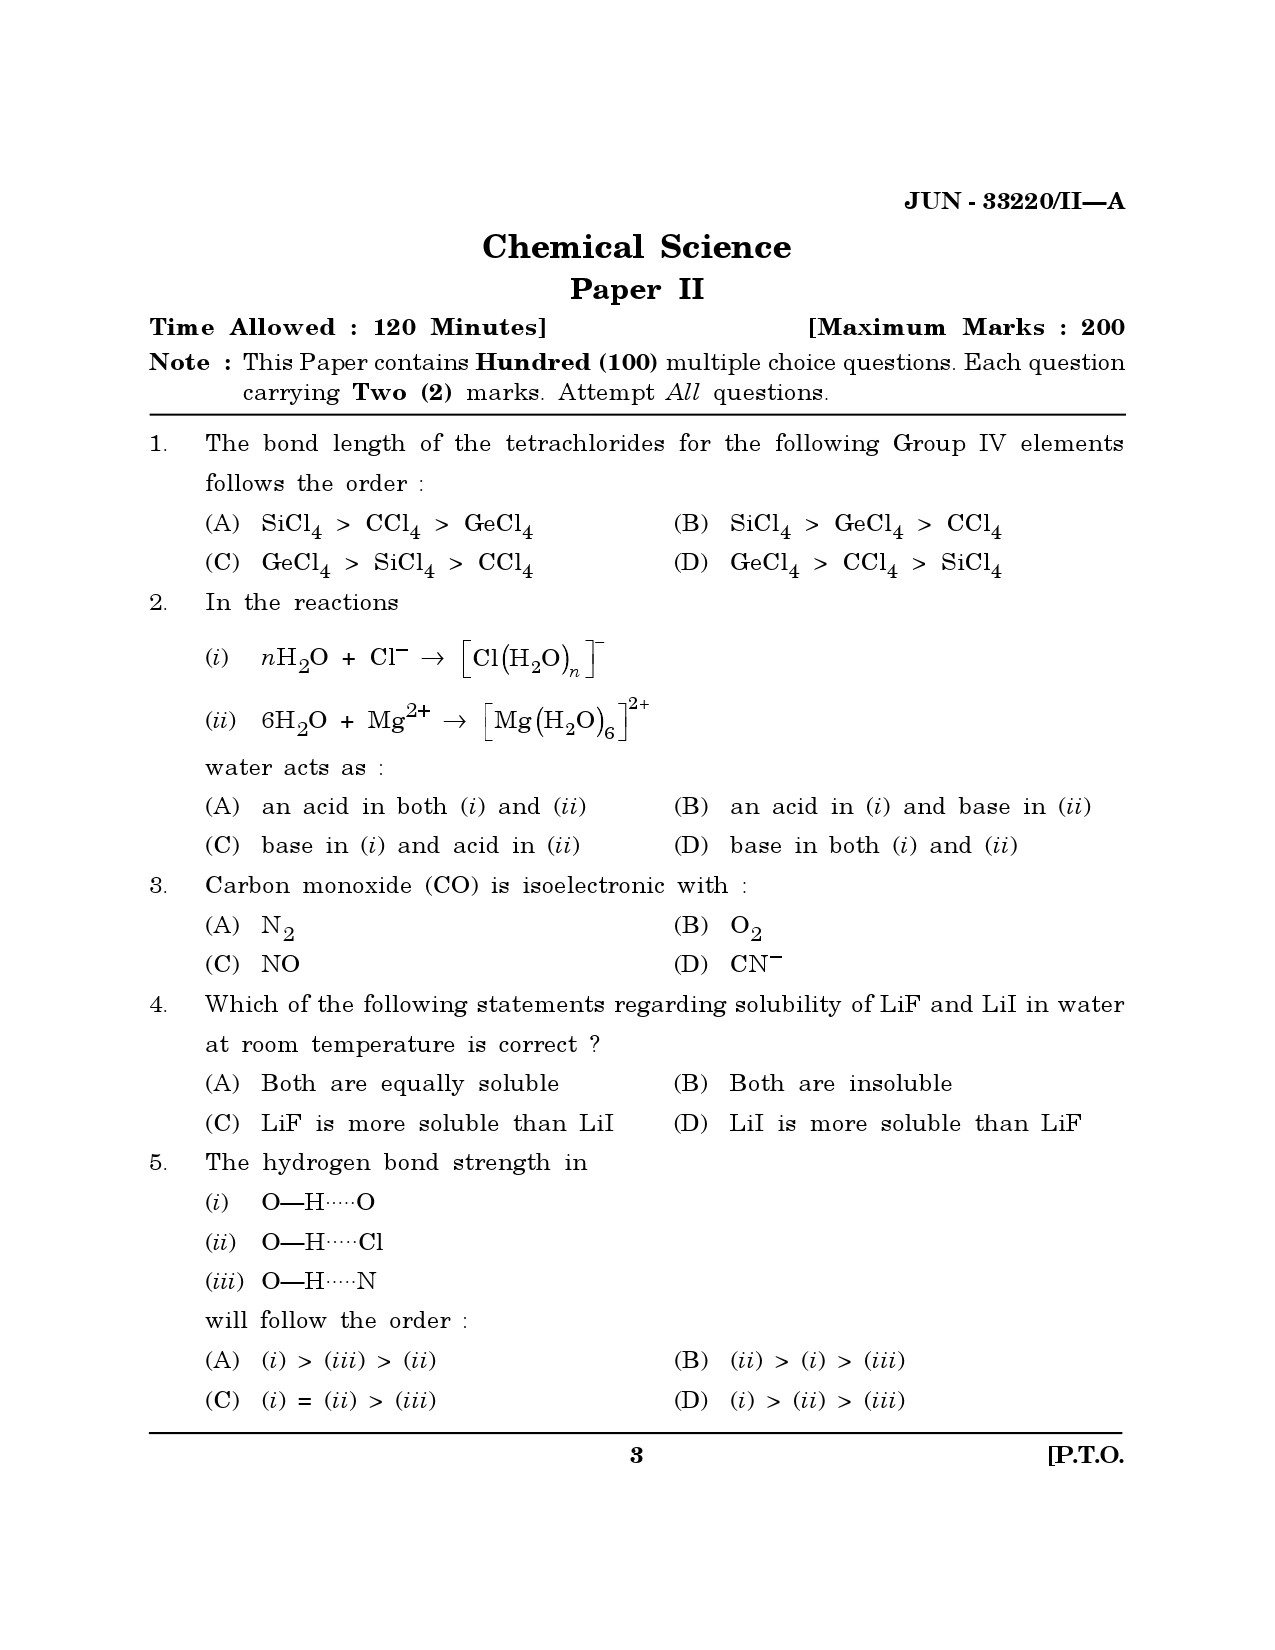 Maharashtra SET Chemical Sciences Question Paper II June 2020 2